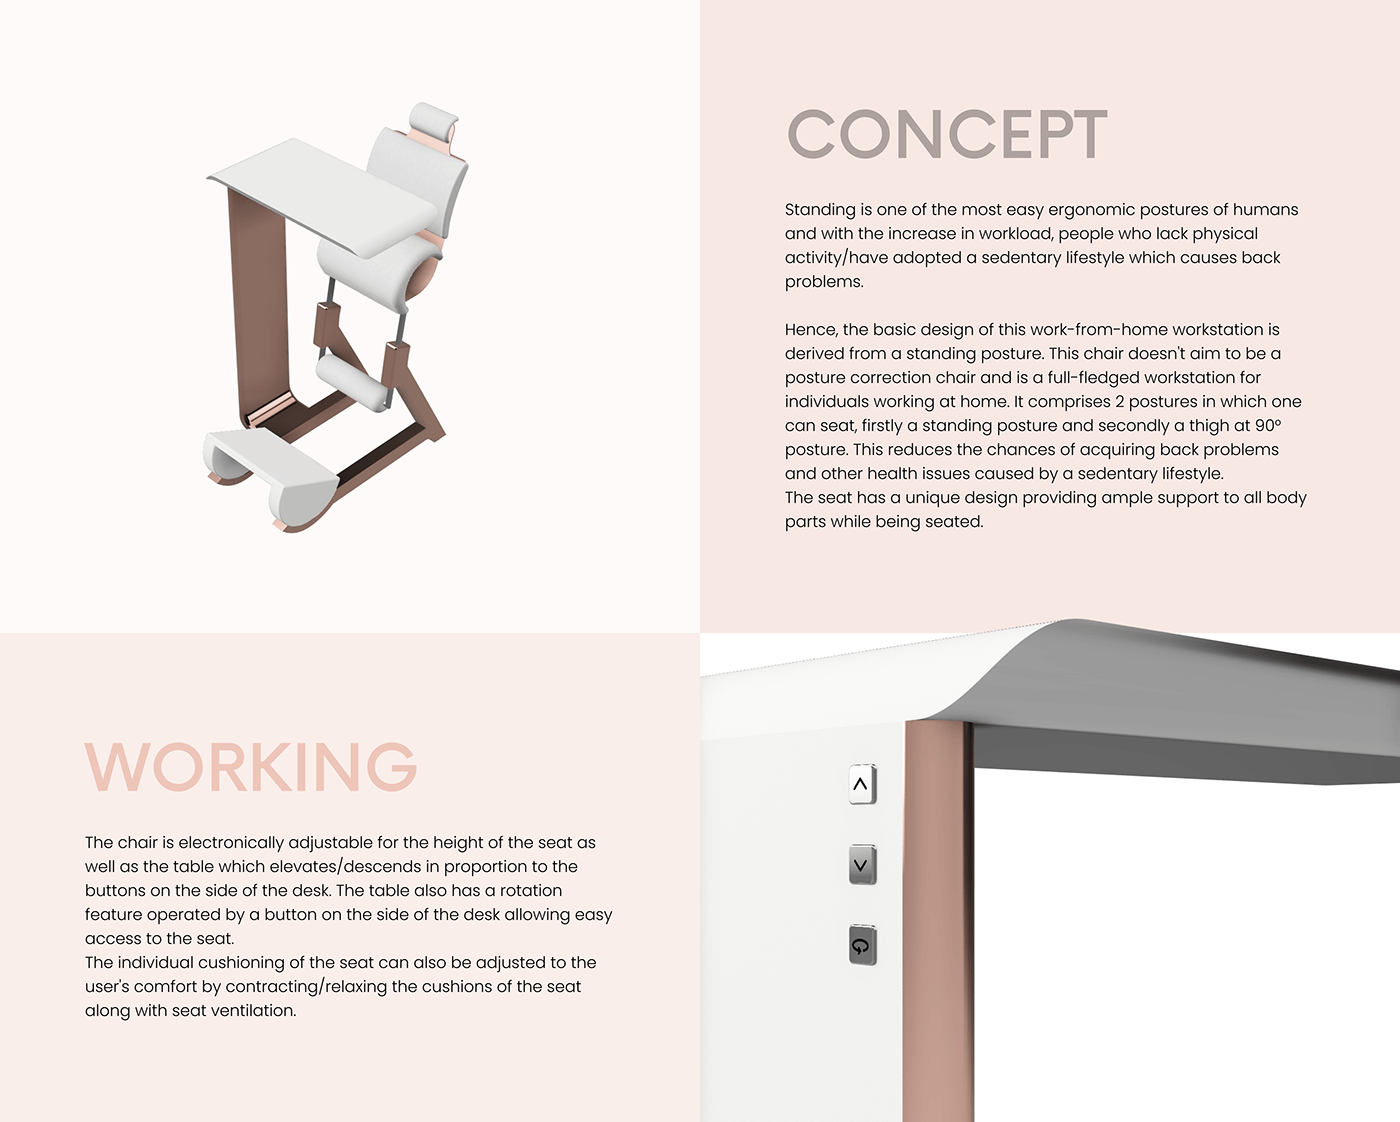 3D chair design concept Ergonomics human factors product product design  research workfromhome workstation